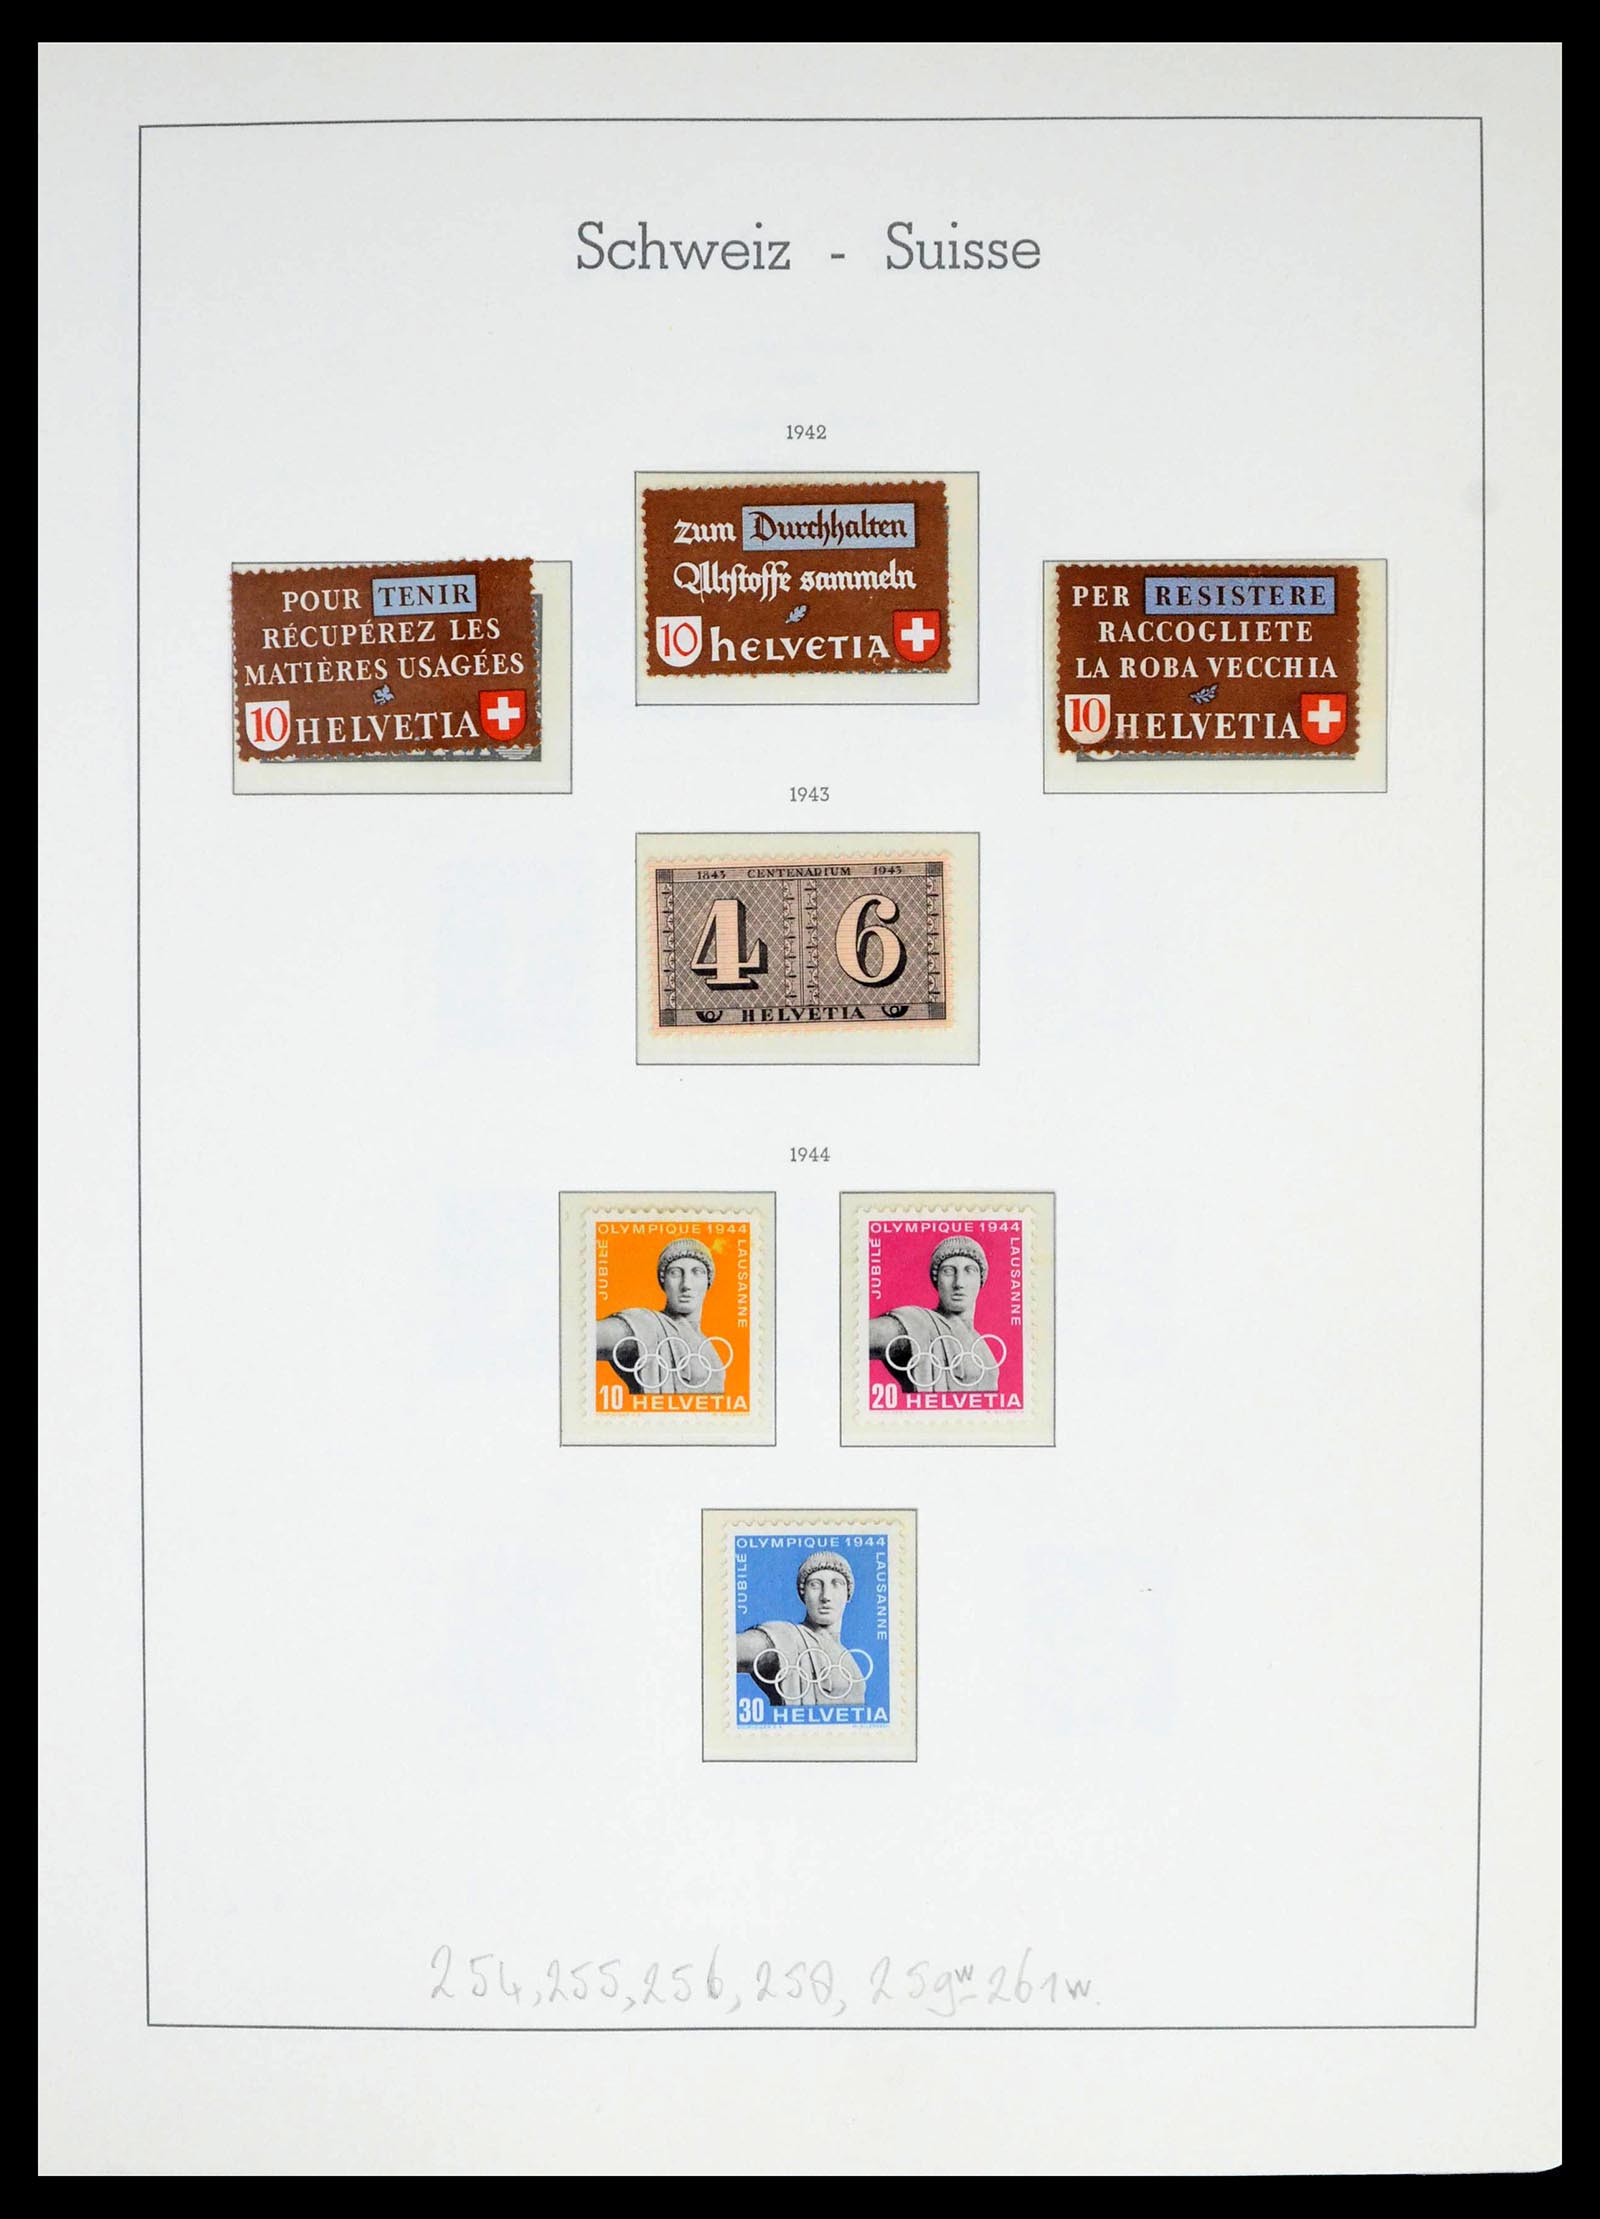 39420 0026 - Stamp collection 39420 Switzerland 1862-1974.